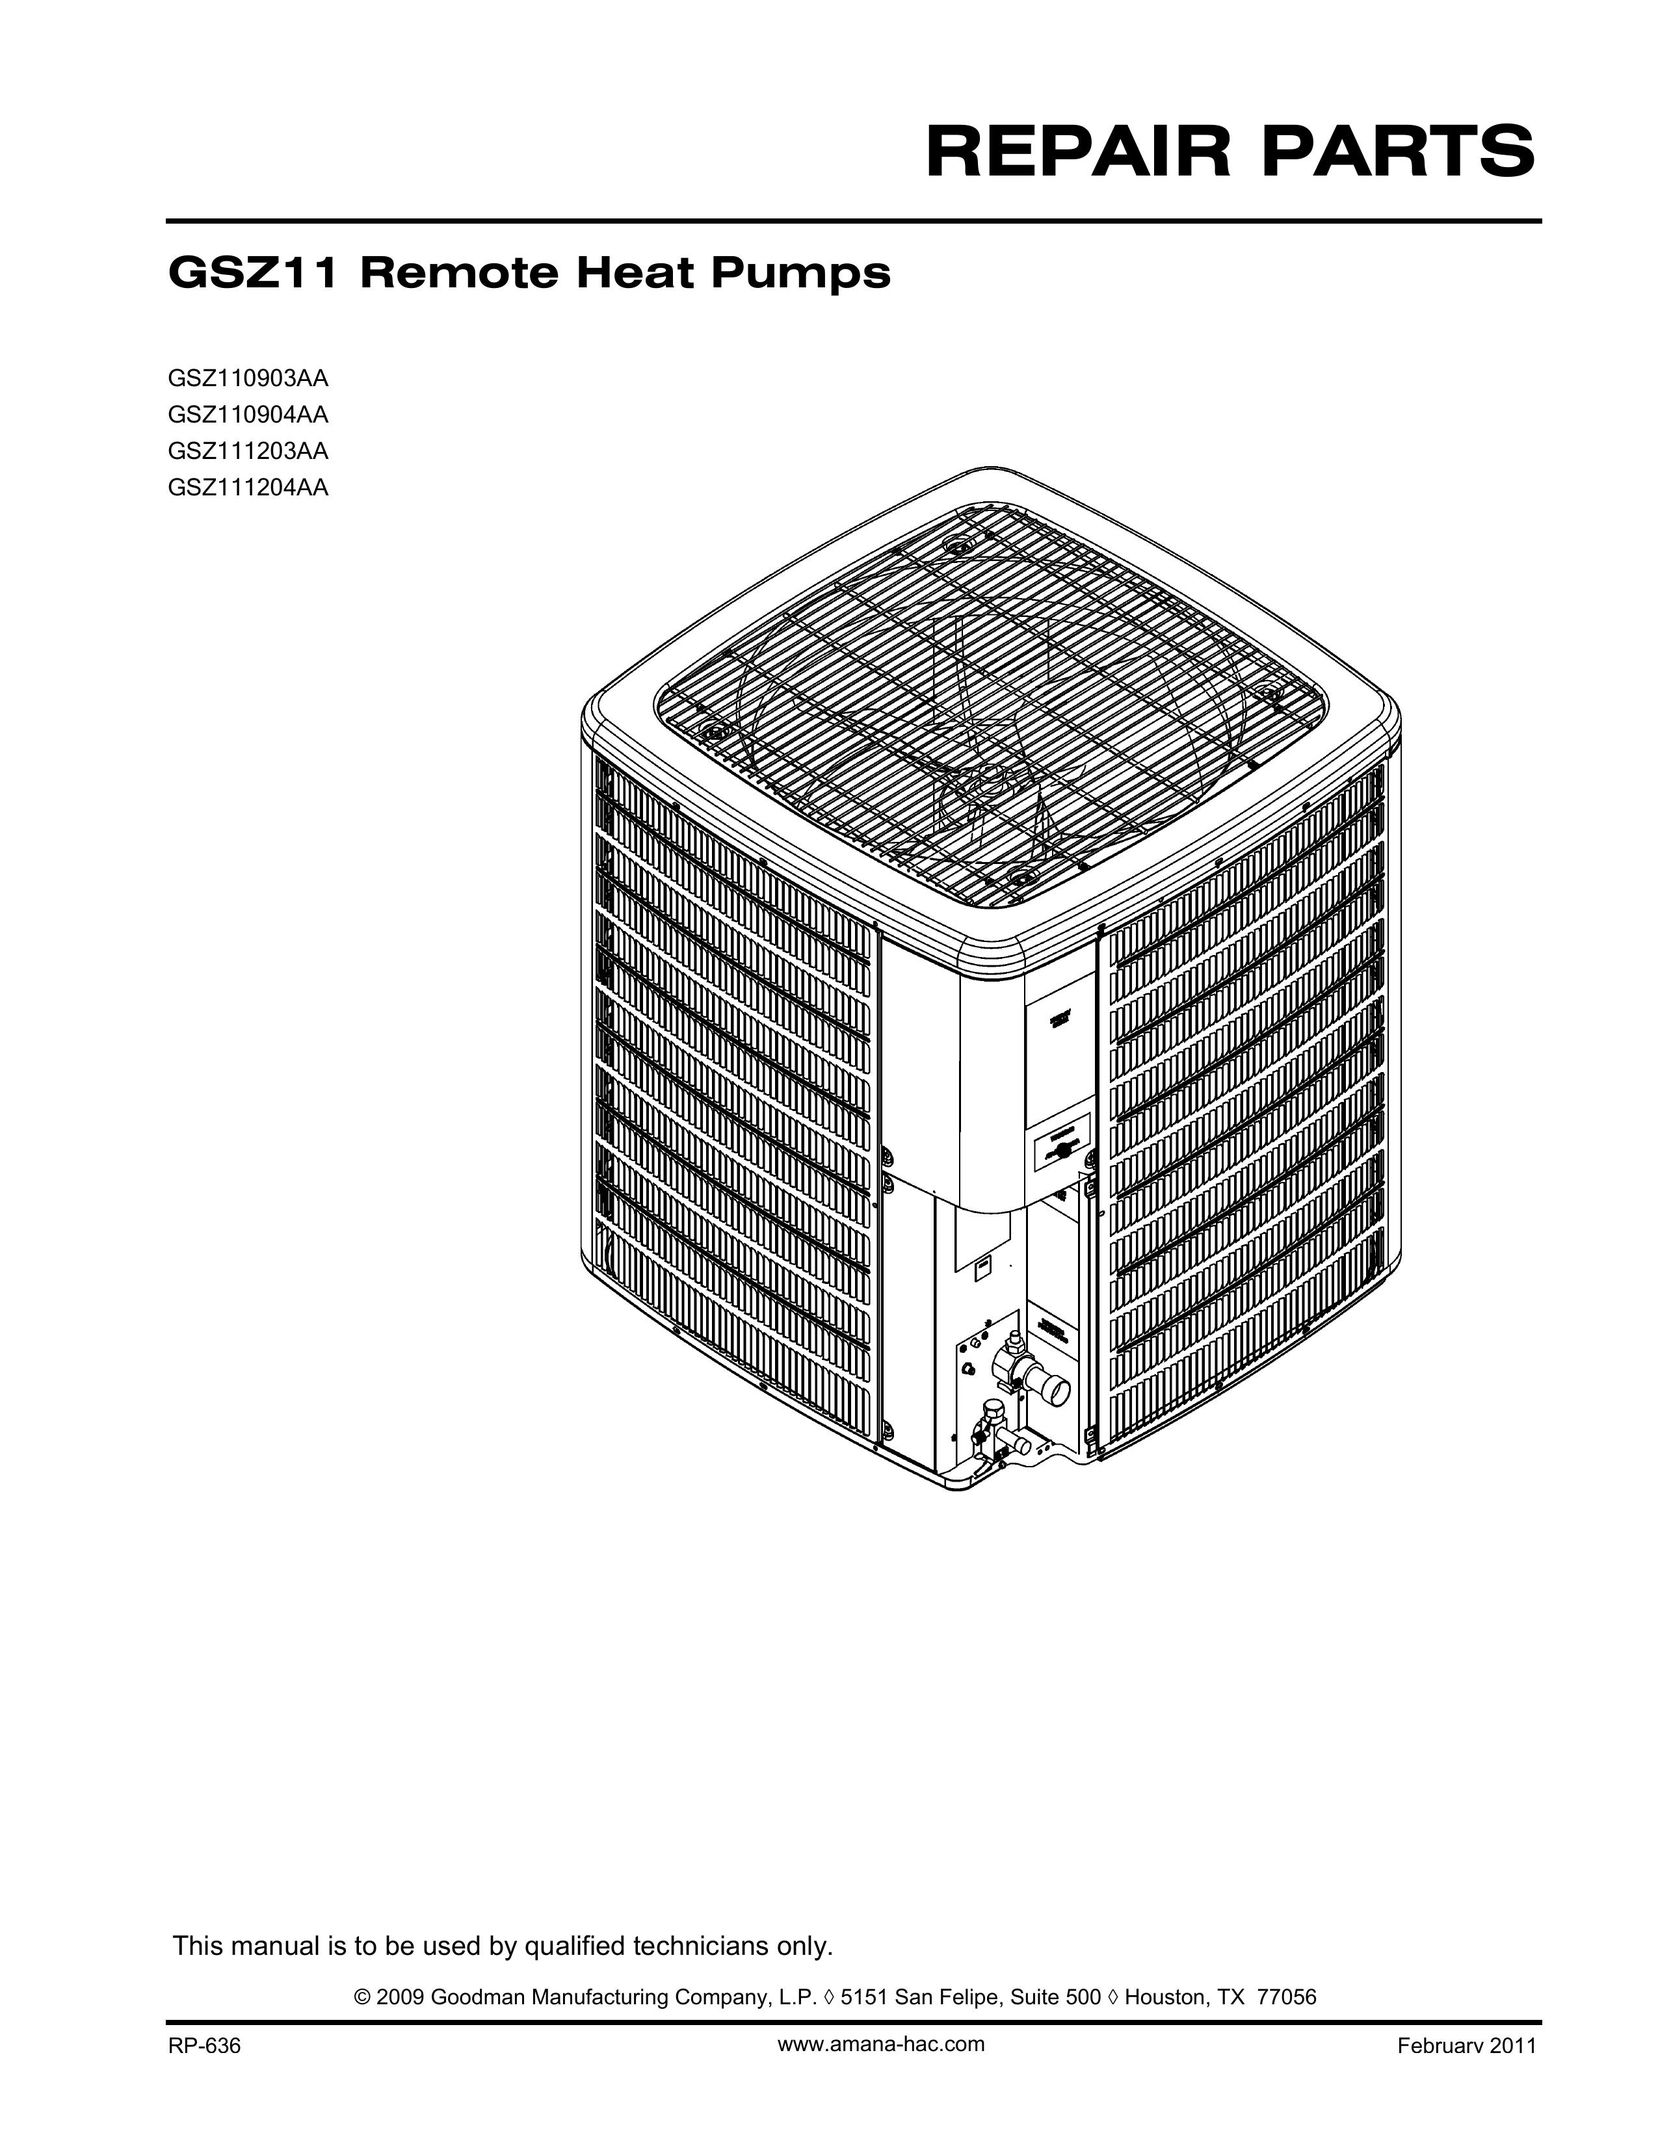 Goodman Mfg GSZ11203AA Heat Pump User Manual